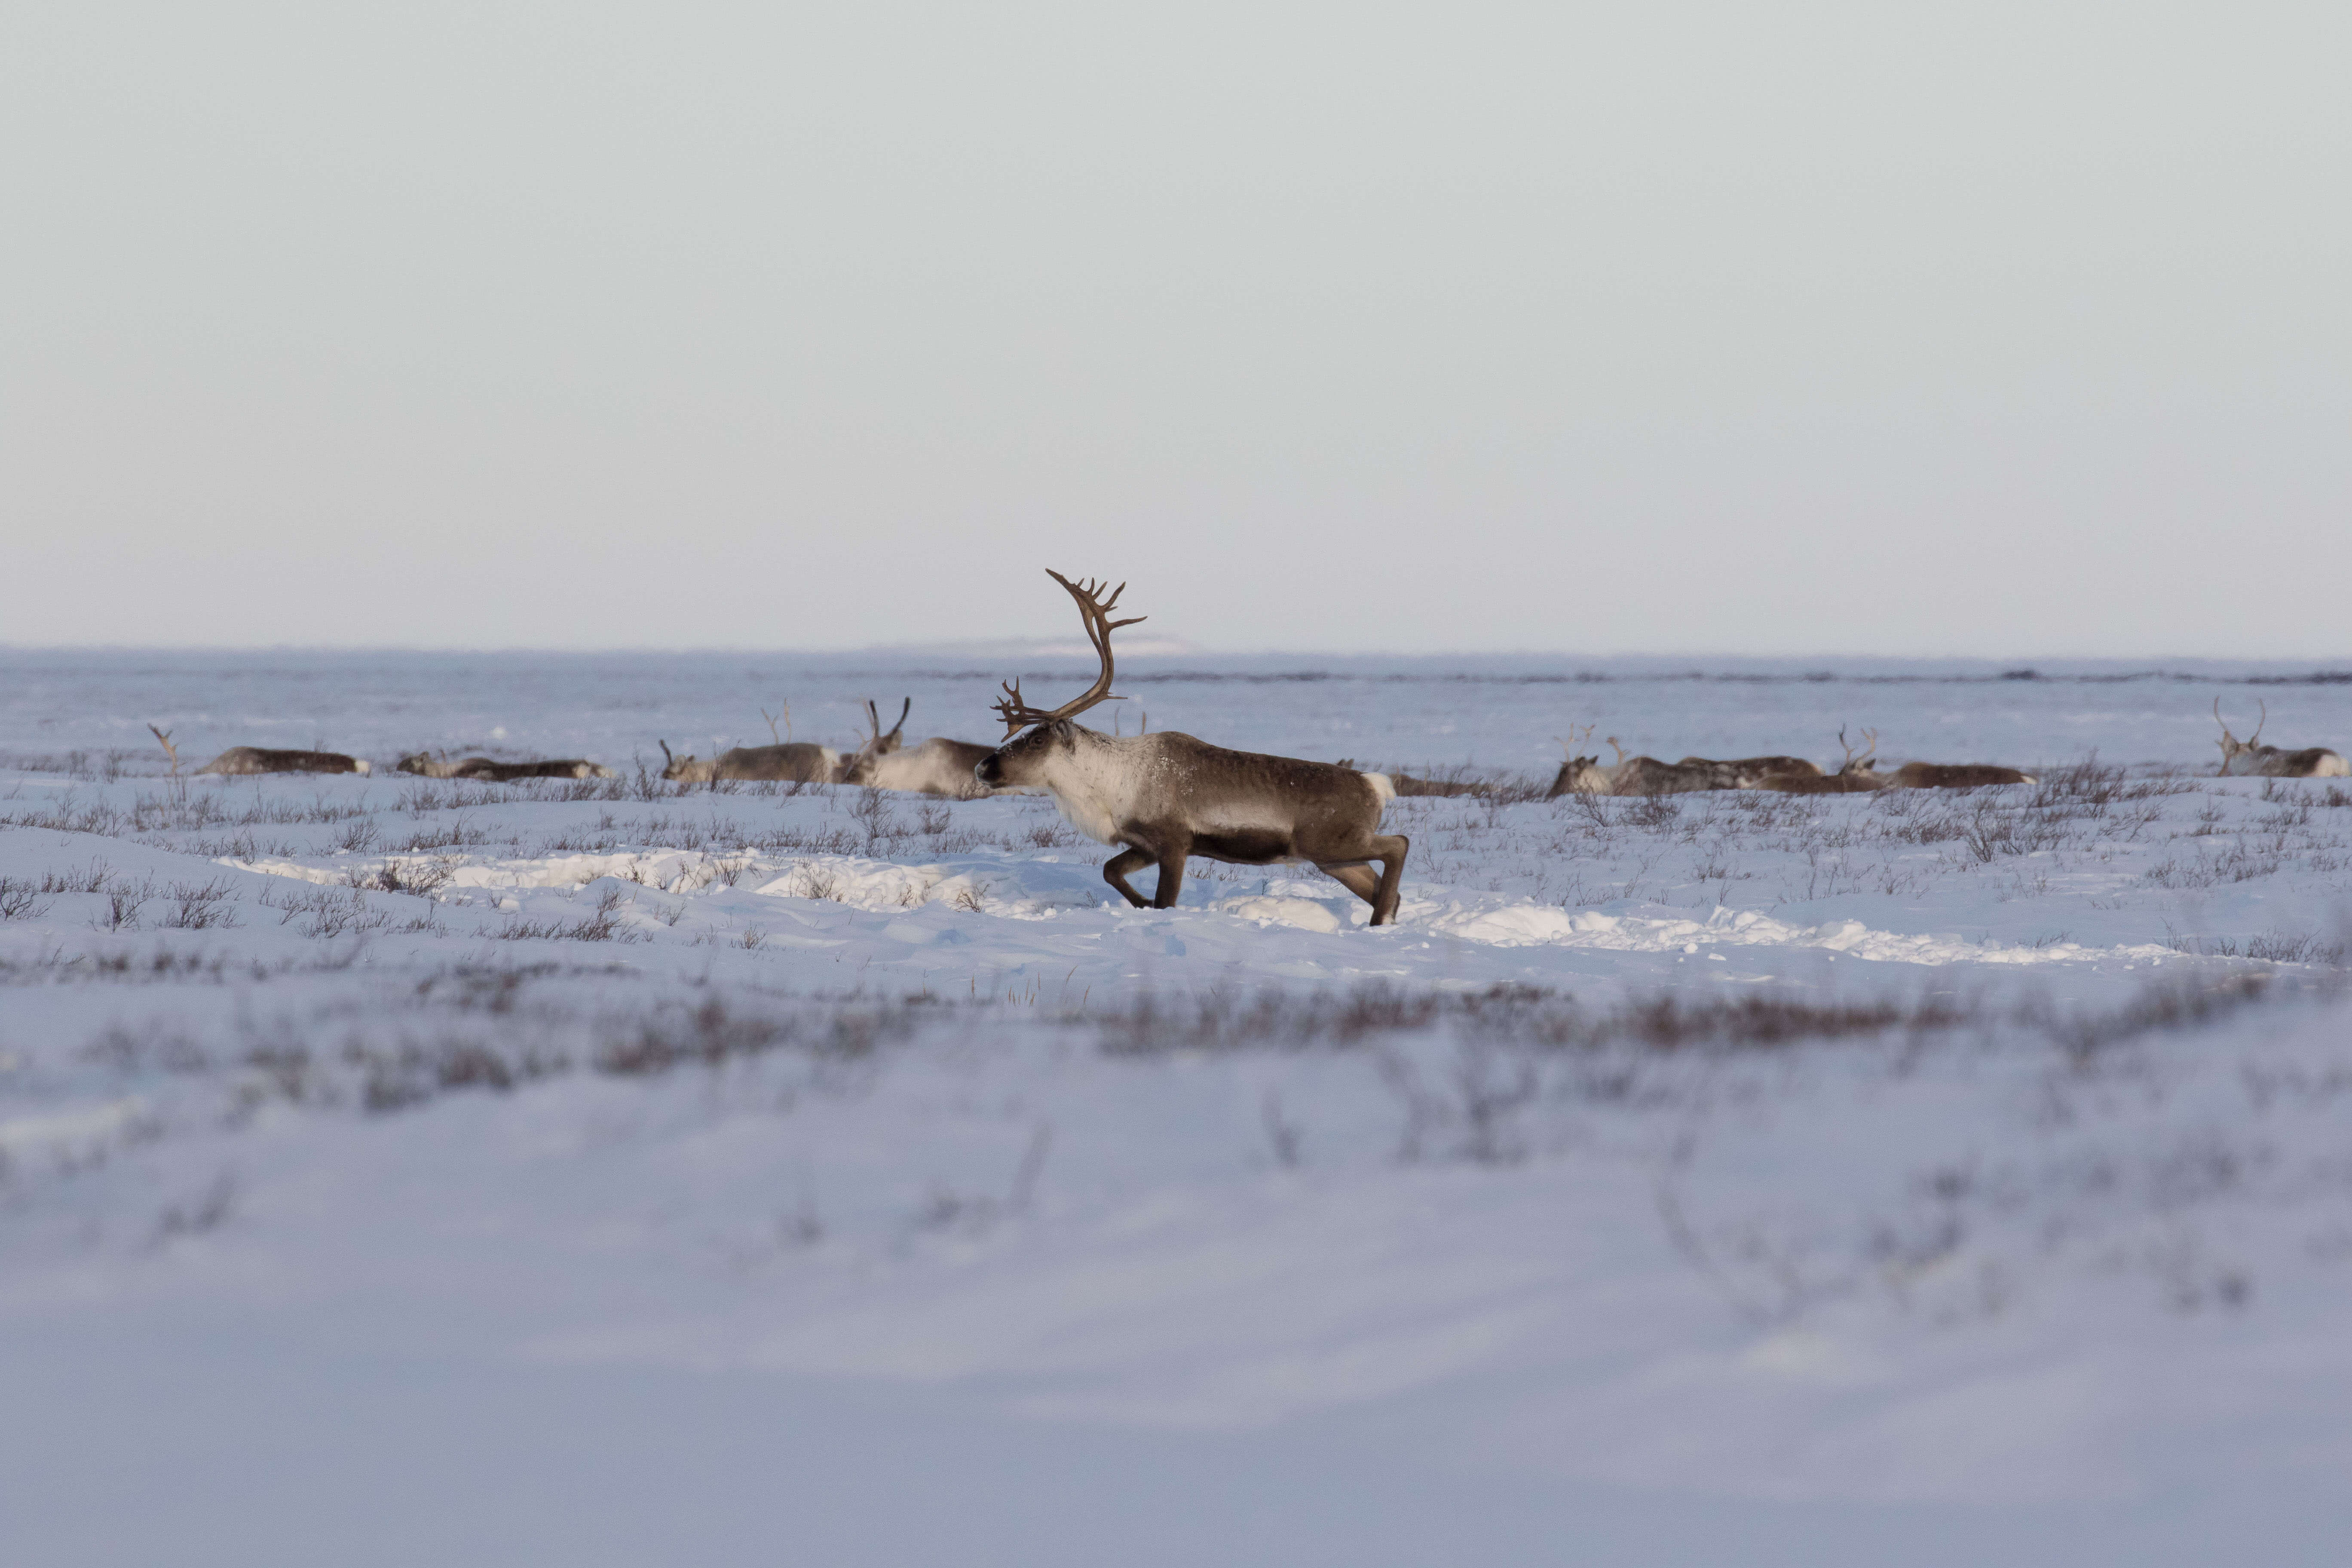 ArcticKingdom_DAVID_BRIGGS_Caribou herd near Arviat on ground_49A1823